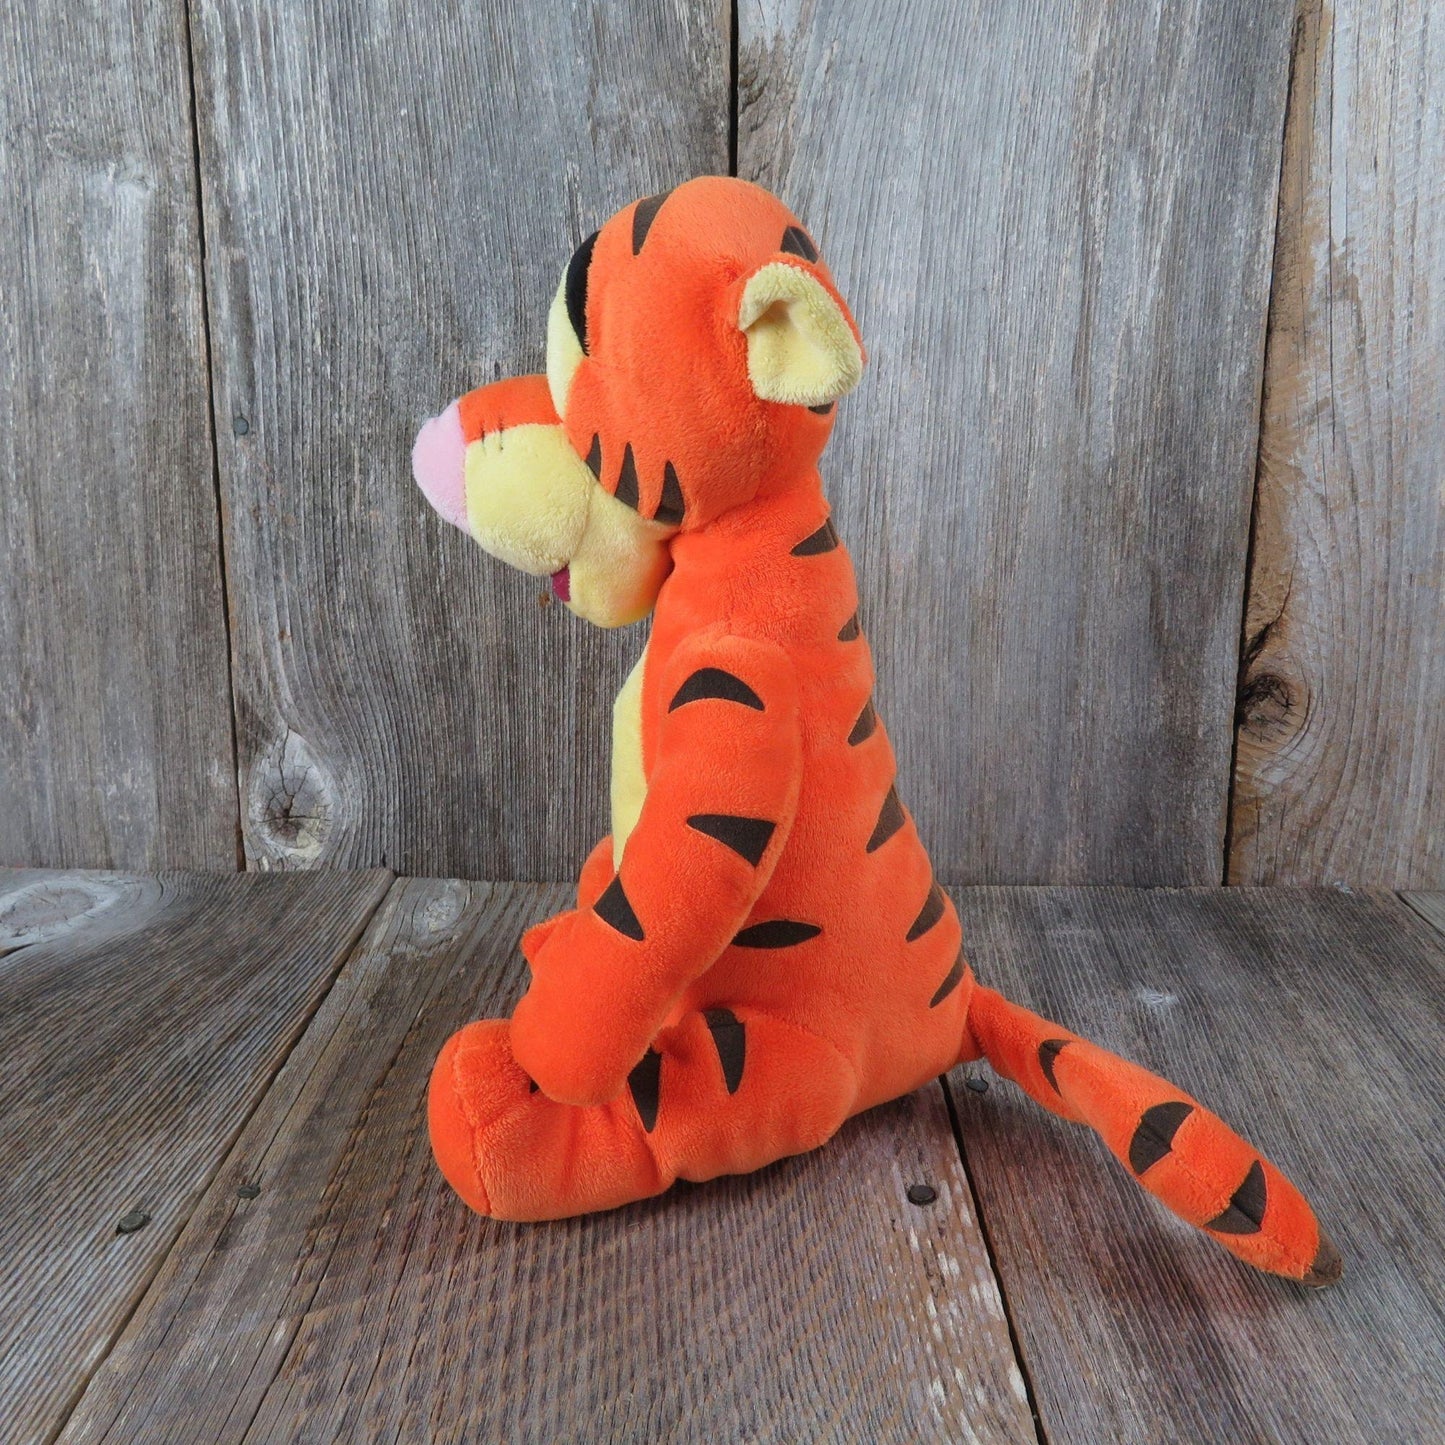 Tigger Plush Stuffed Animal Winnie the Pooh Kohl's Cares Disney Toy Doll Orange